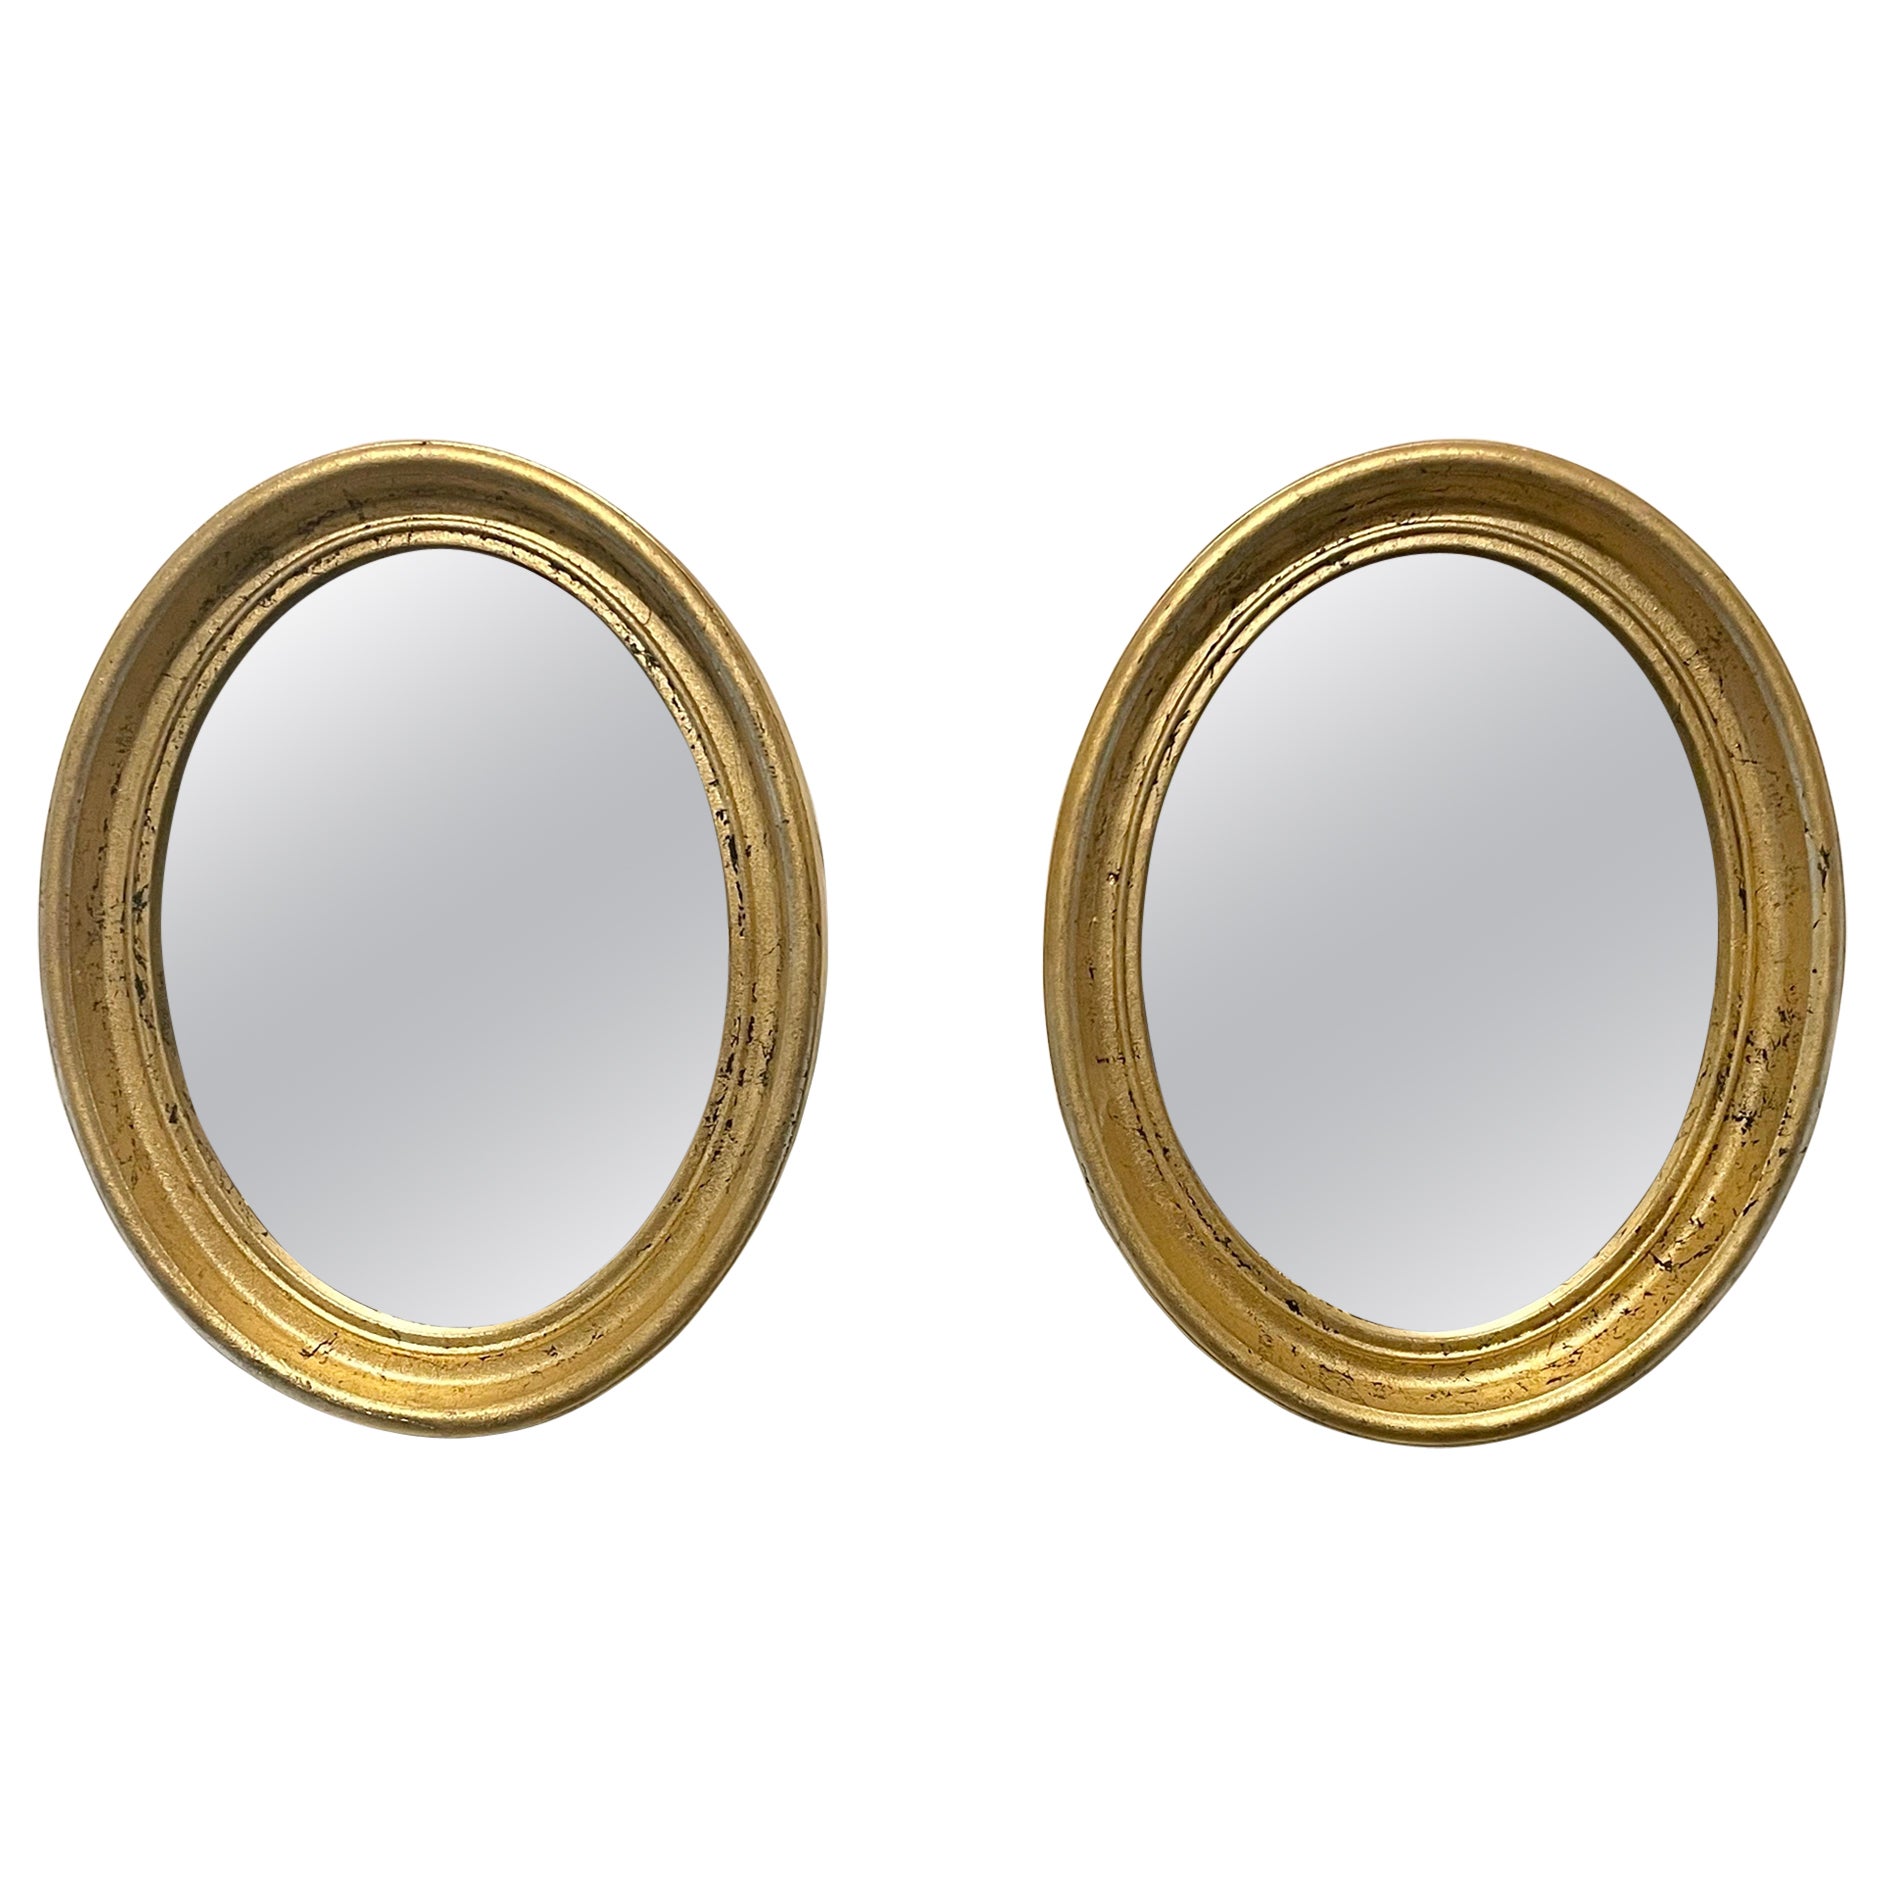 Pair Of Vintage Gilt Oval Italian Mirrors